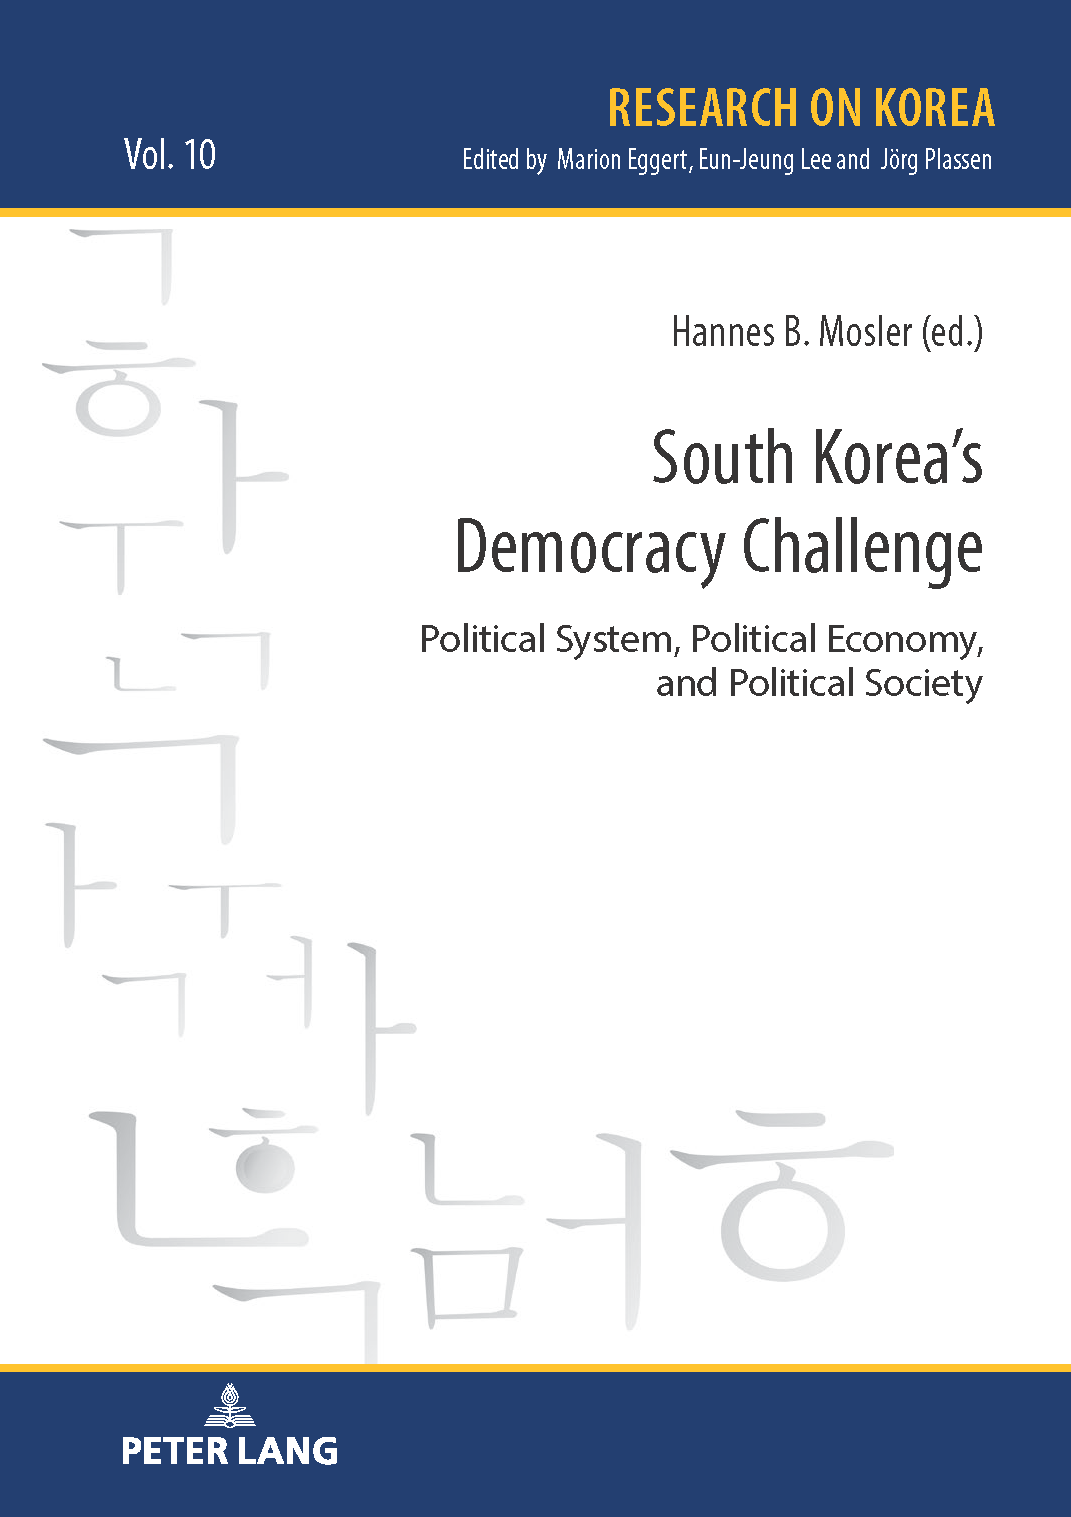 hbm-sk-democracy-challenge